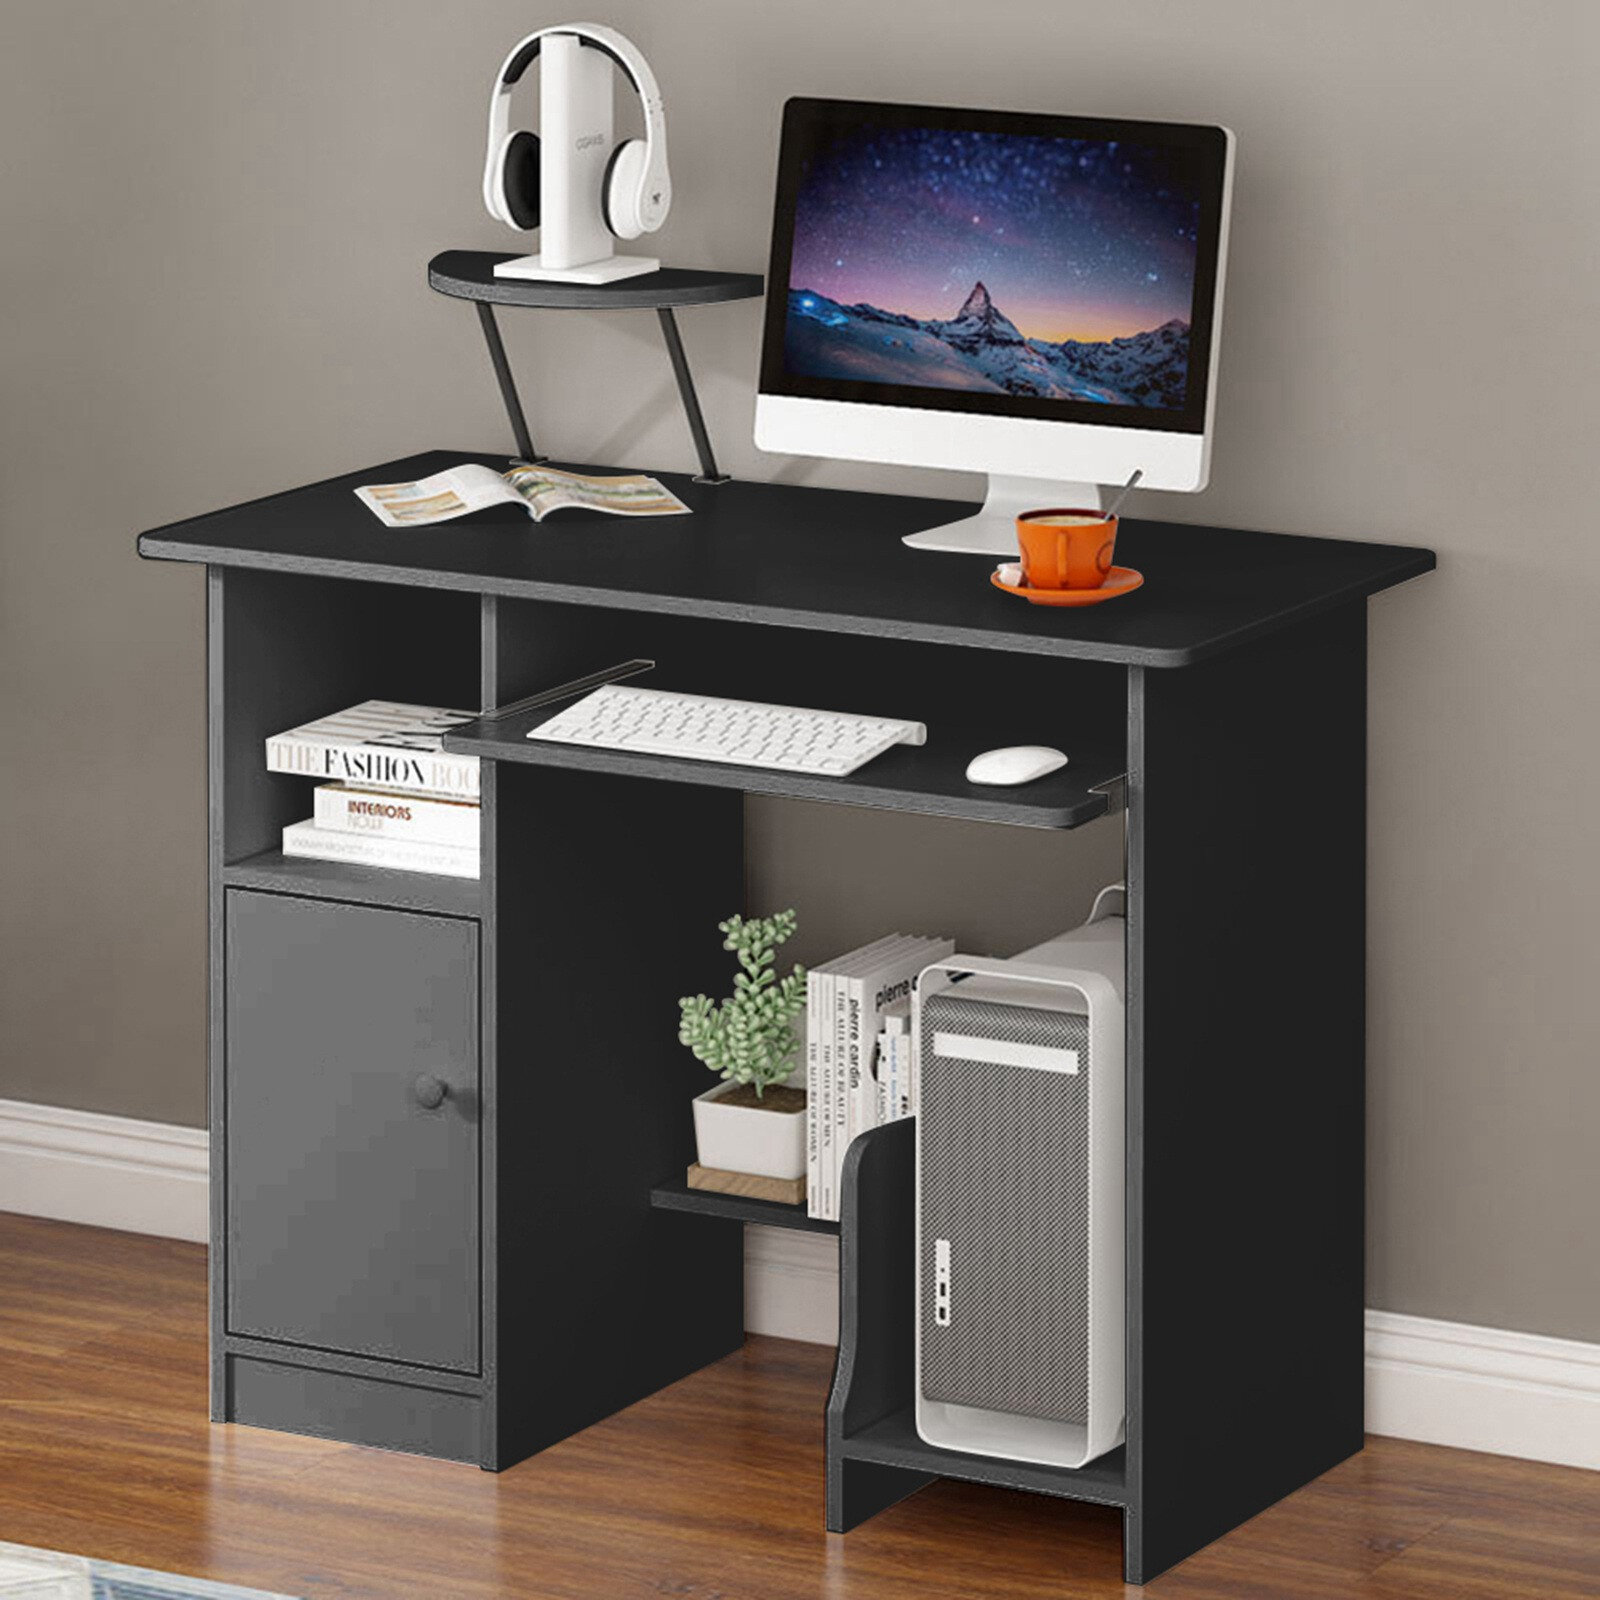 Details about   Adjustable Screen Shelf Office Storage Rack Clip Computer Table Desk Accessory V